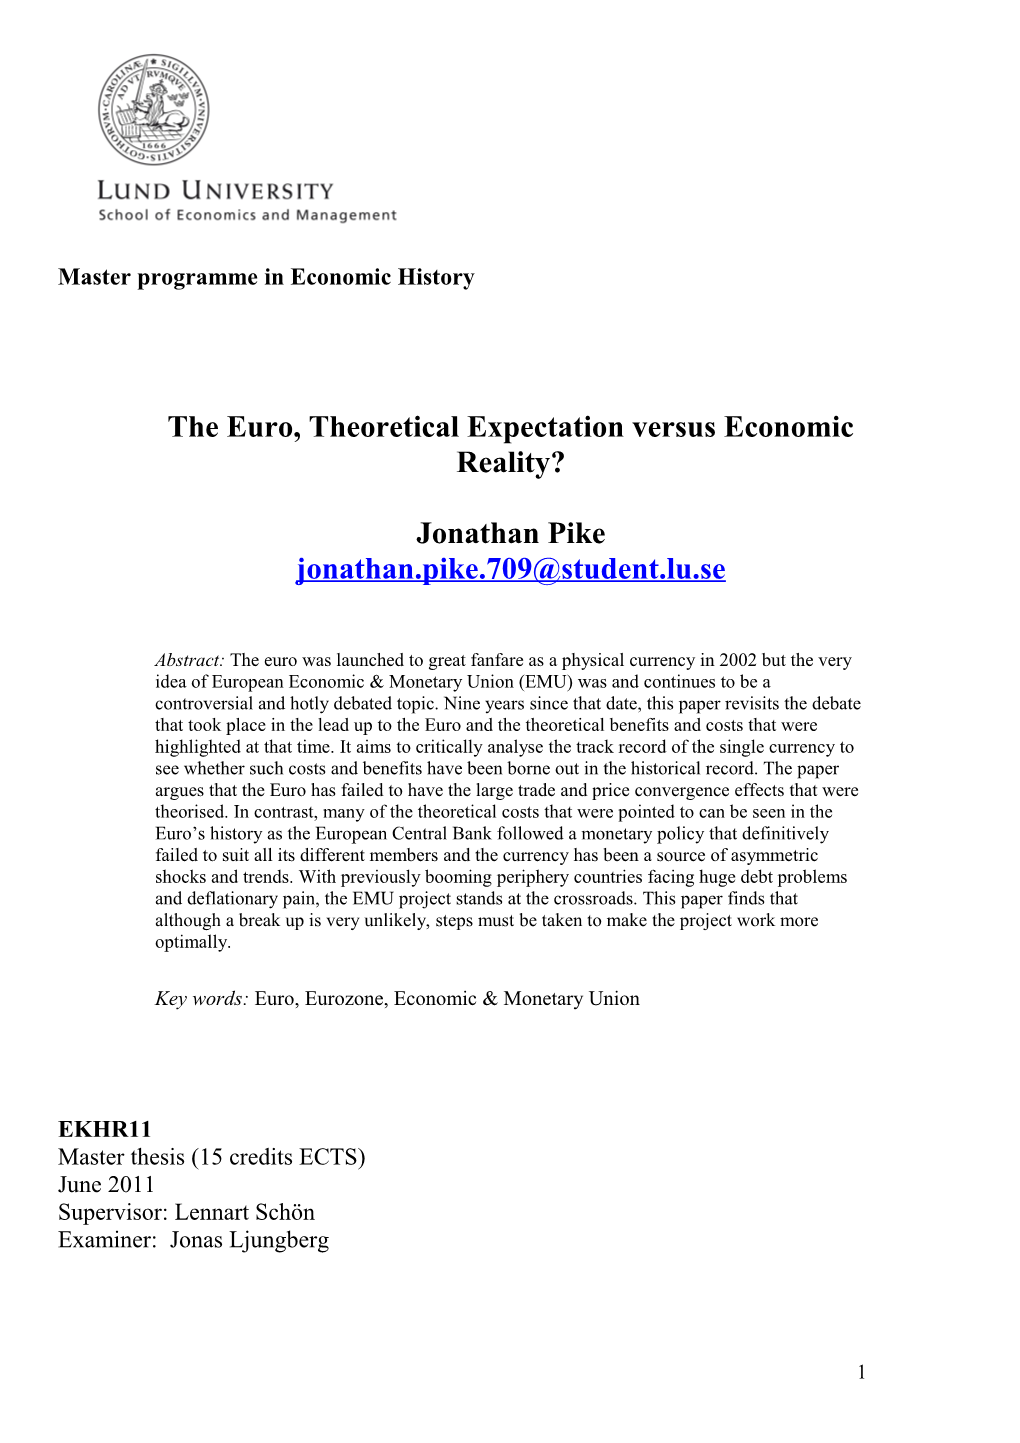 The Euro, Theoretical Expectation Versus Economic Reality?